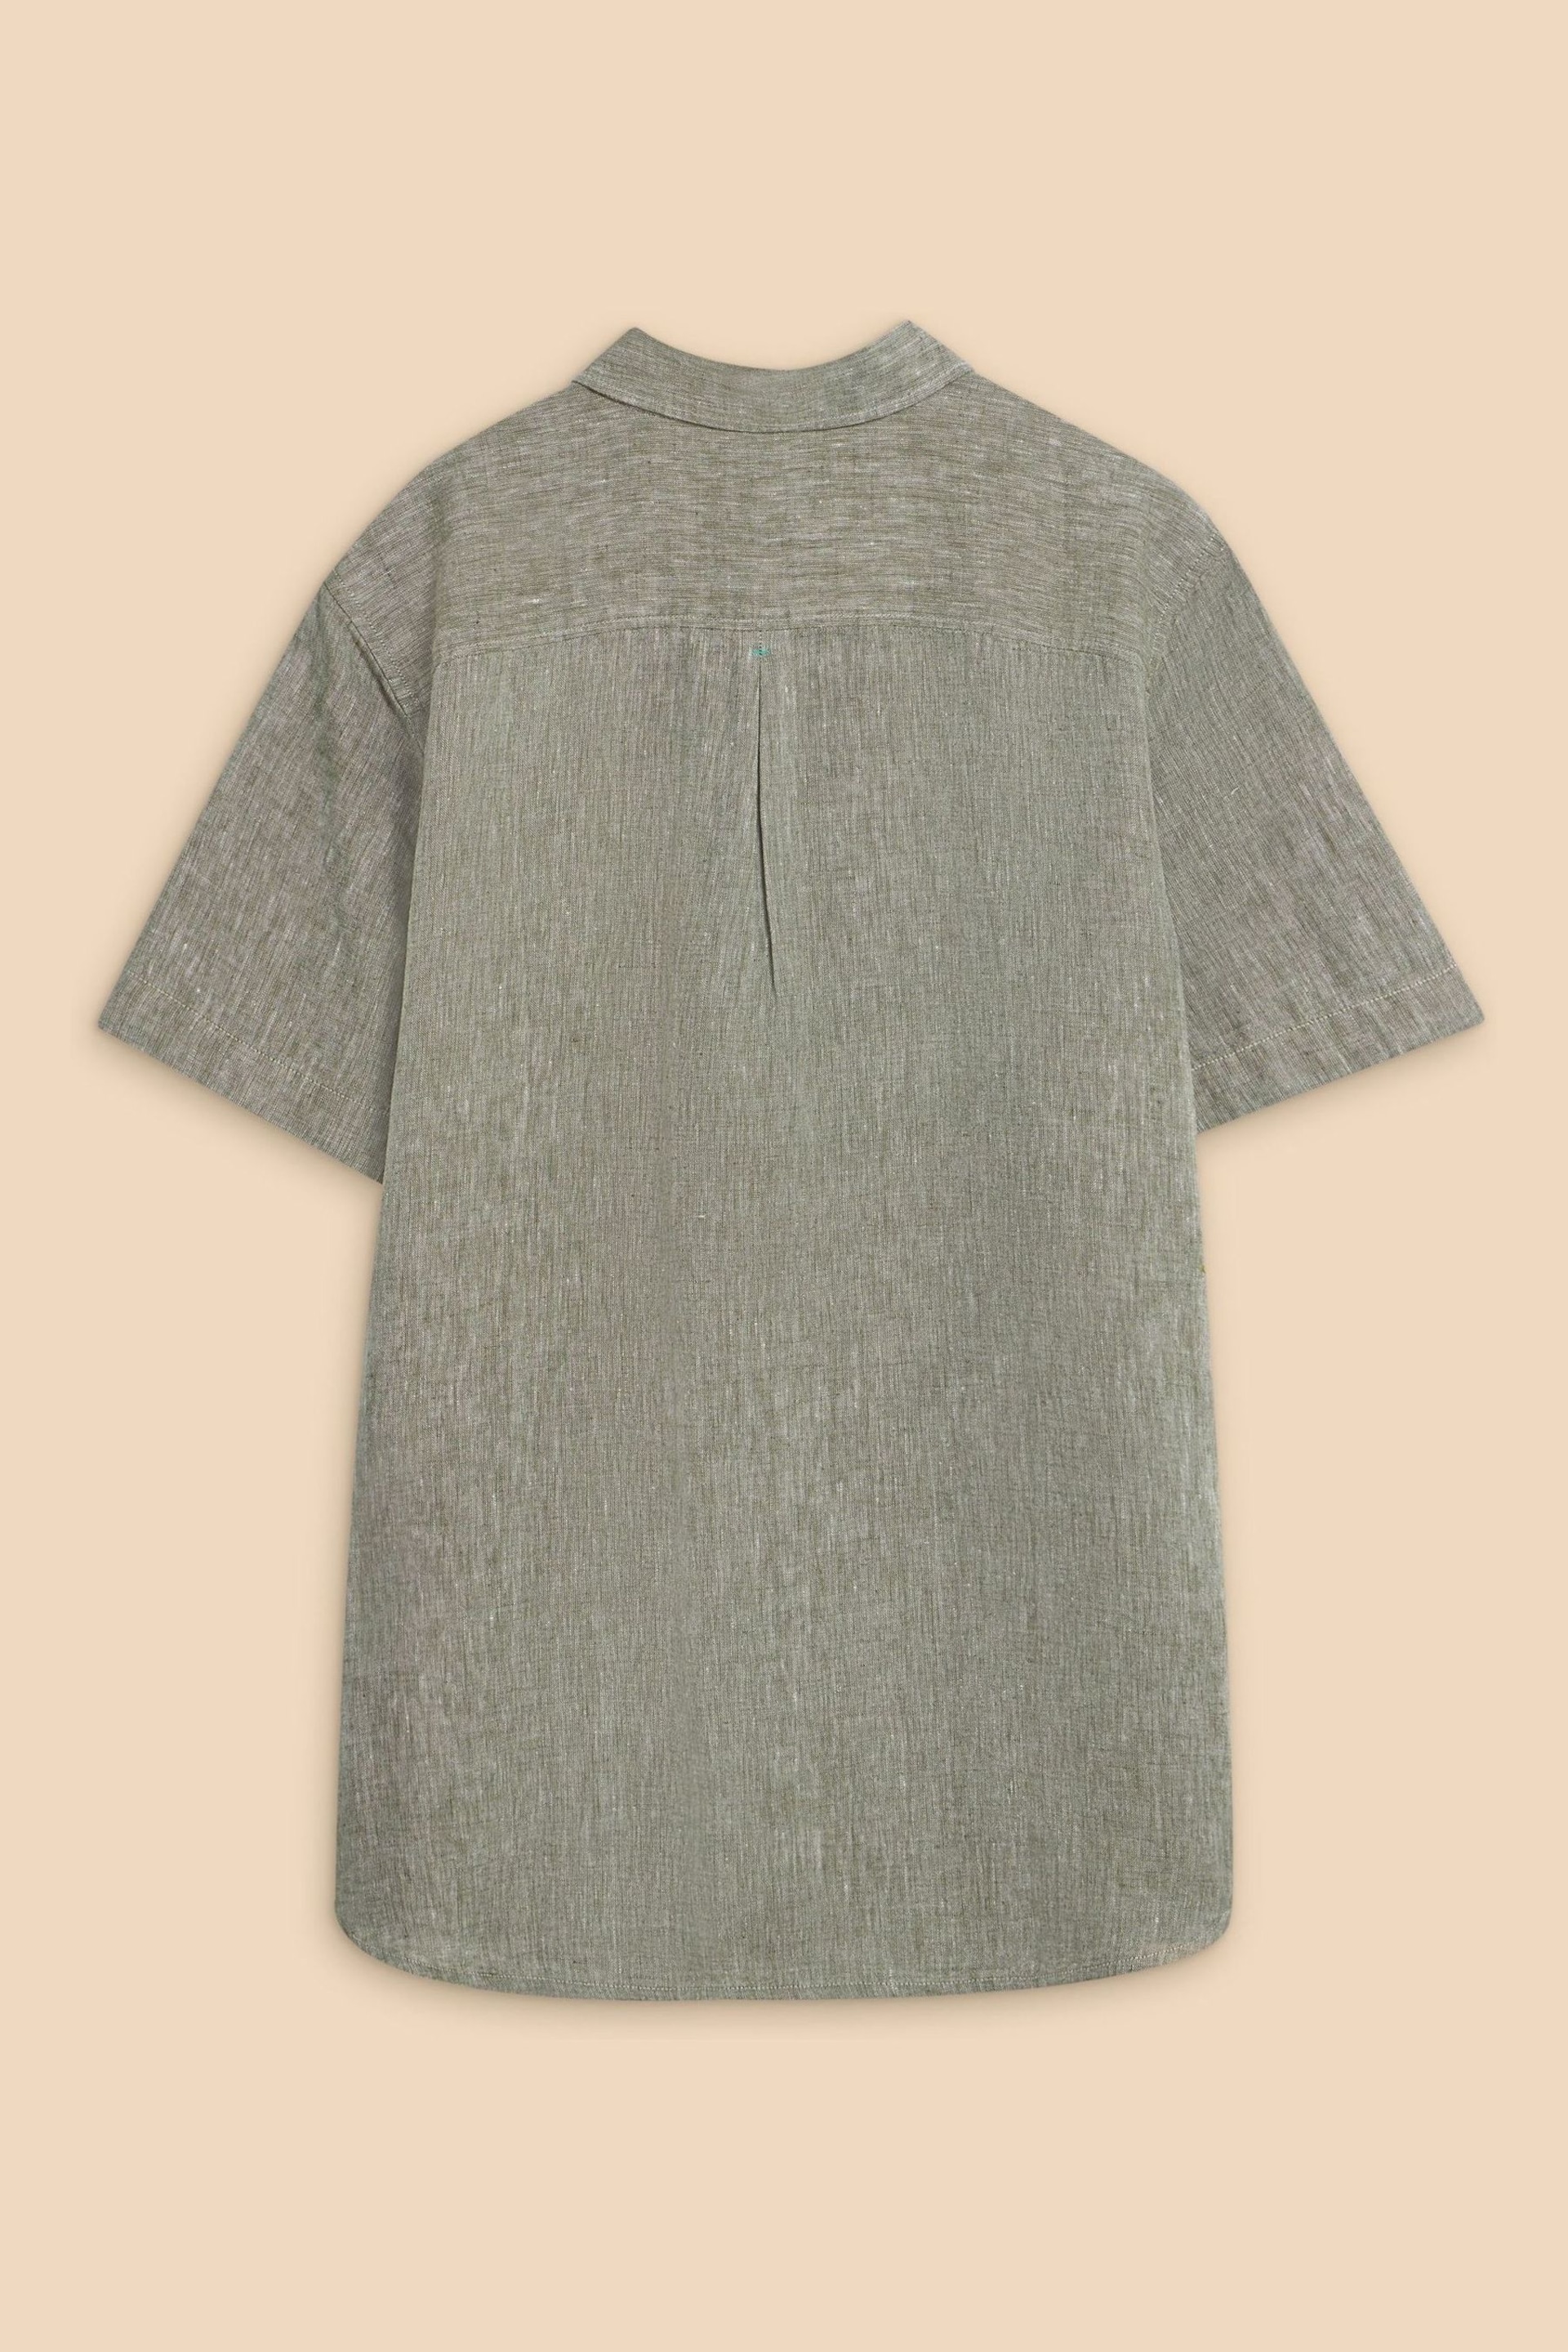 White Stuff Green Pembroke Short Sleeve Linen Shirt - Image 6 of 6